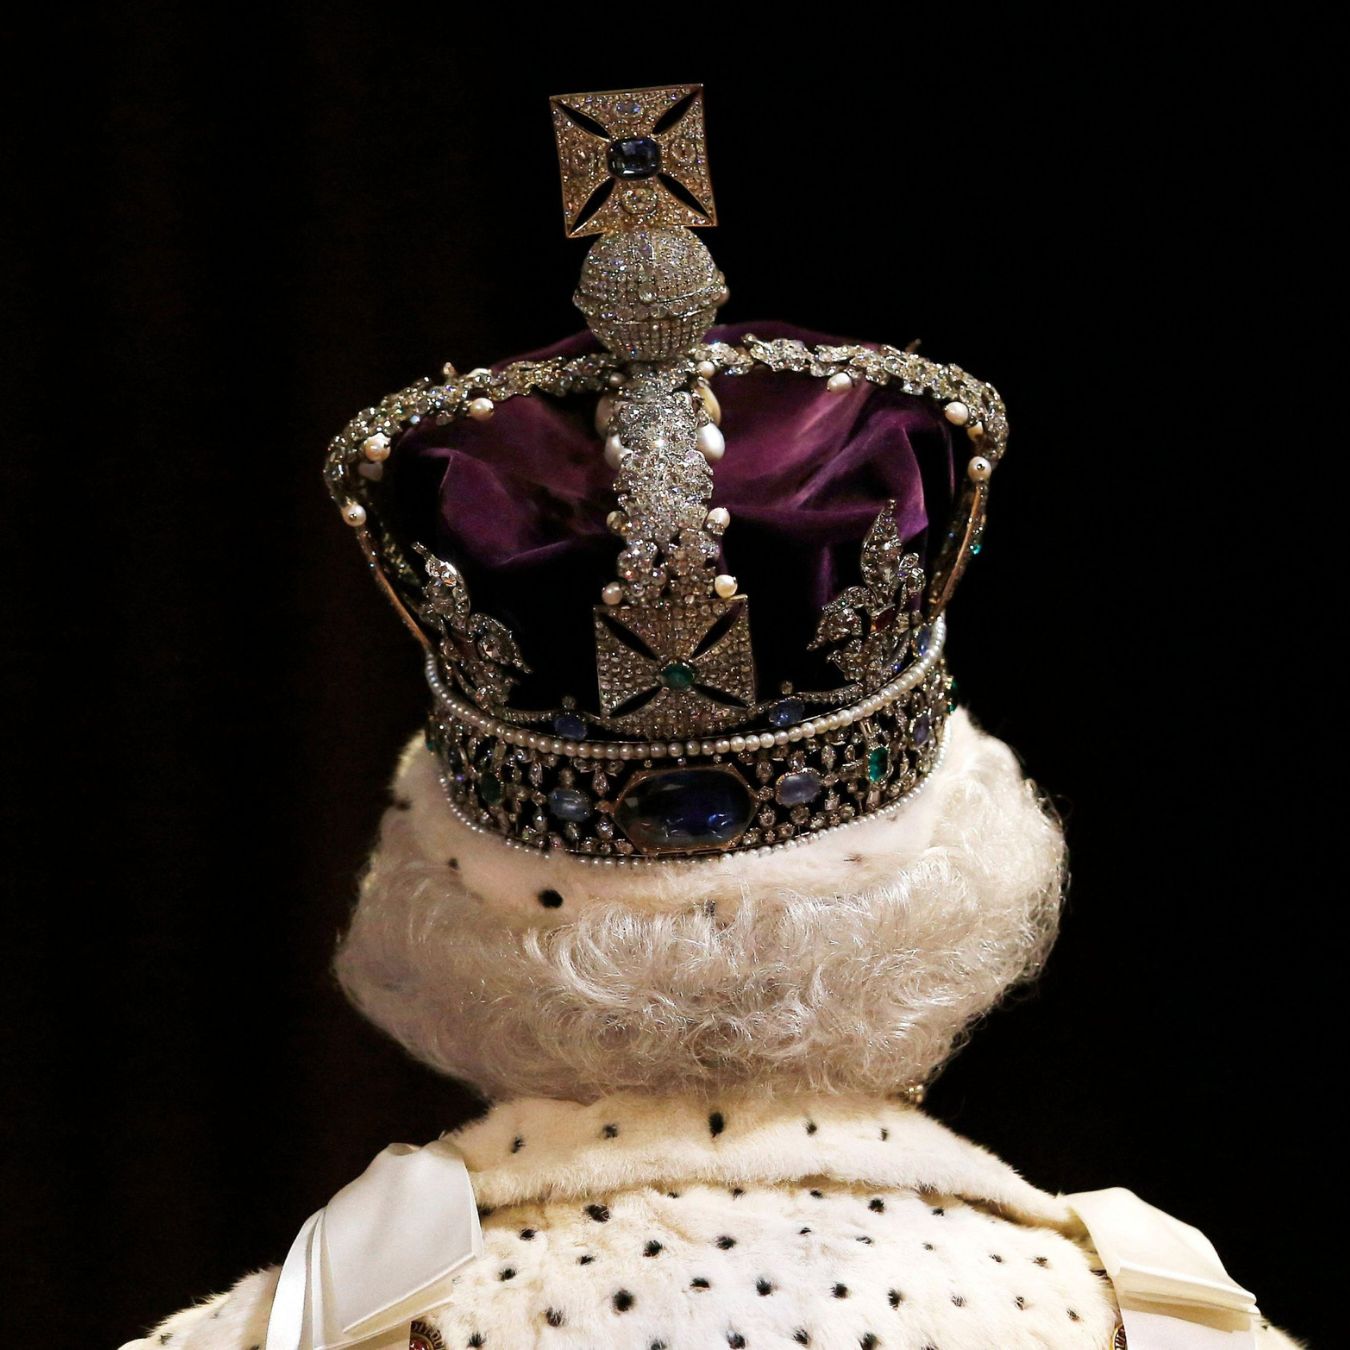 Queen Elizabeths crown and scepter